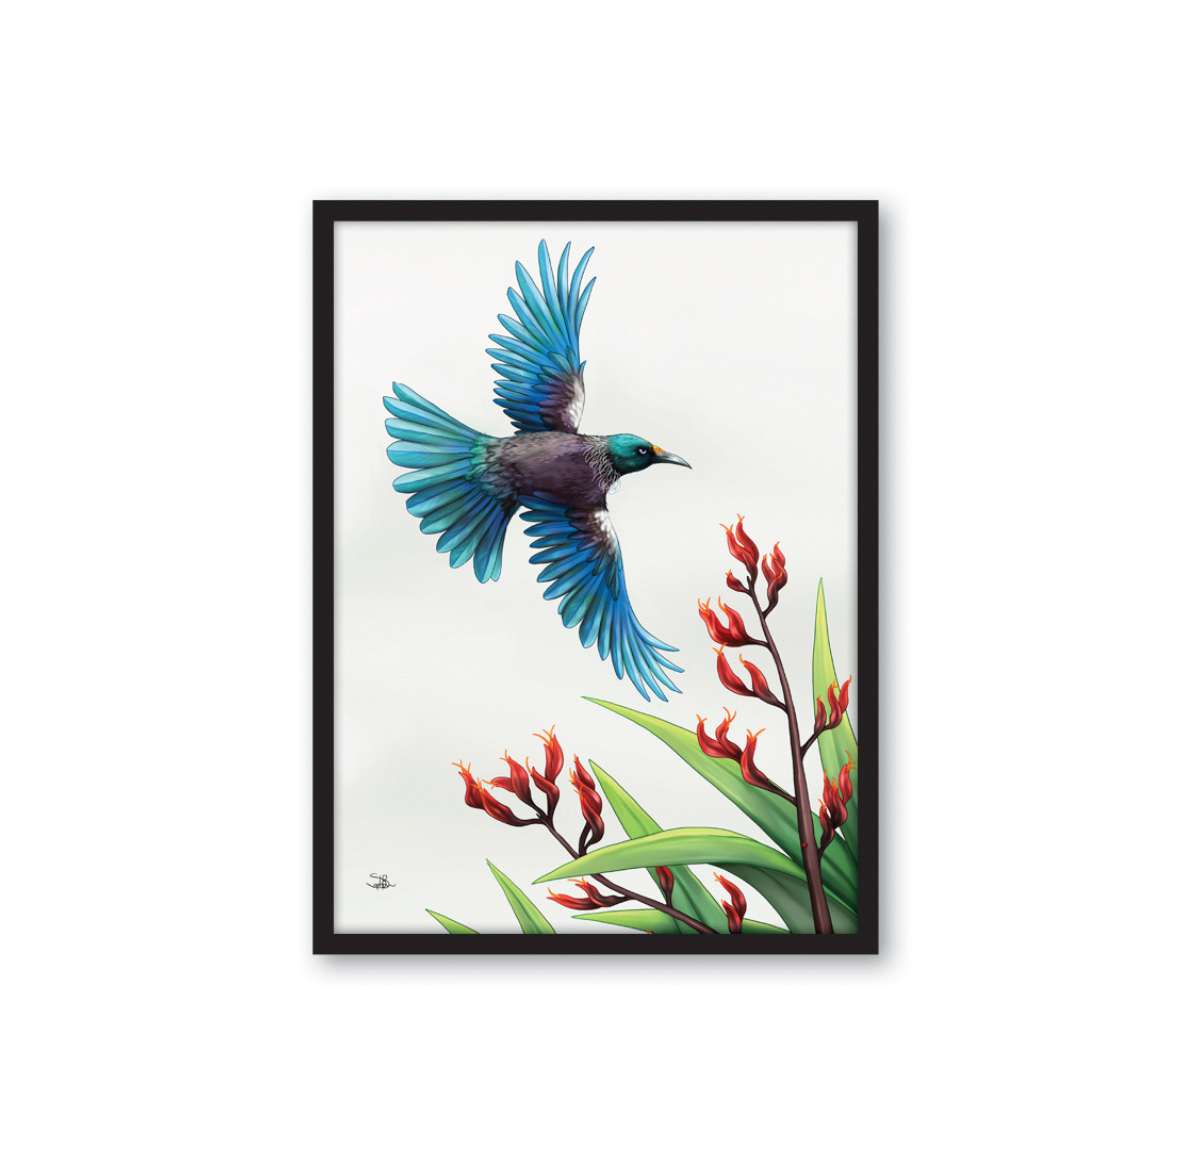 Tui In Flight Framed Canvas Wall Art Print - Small